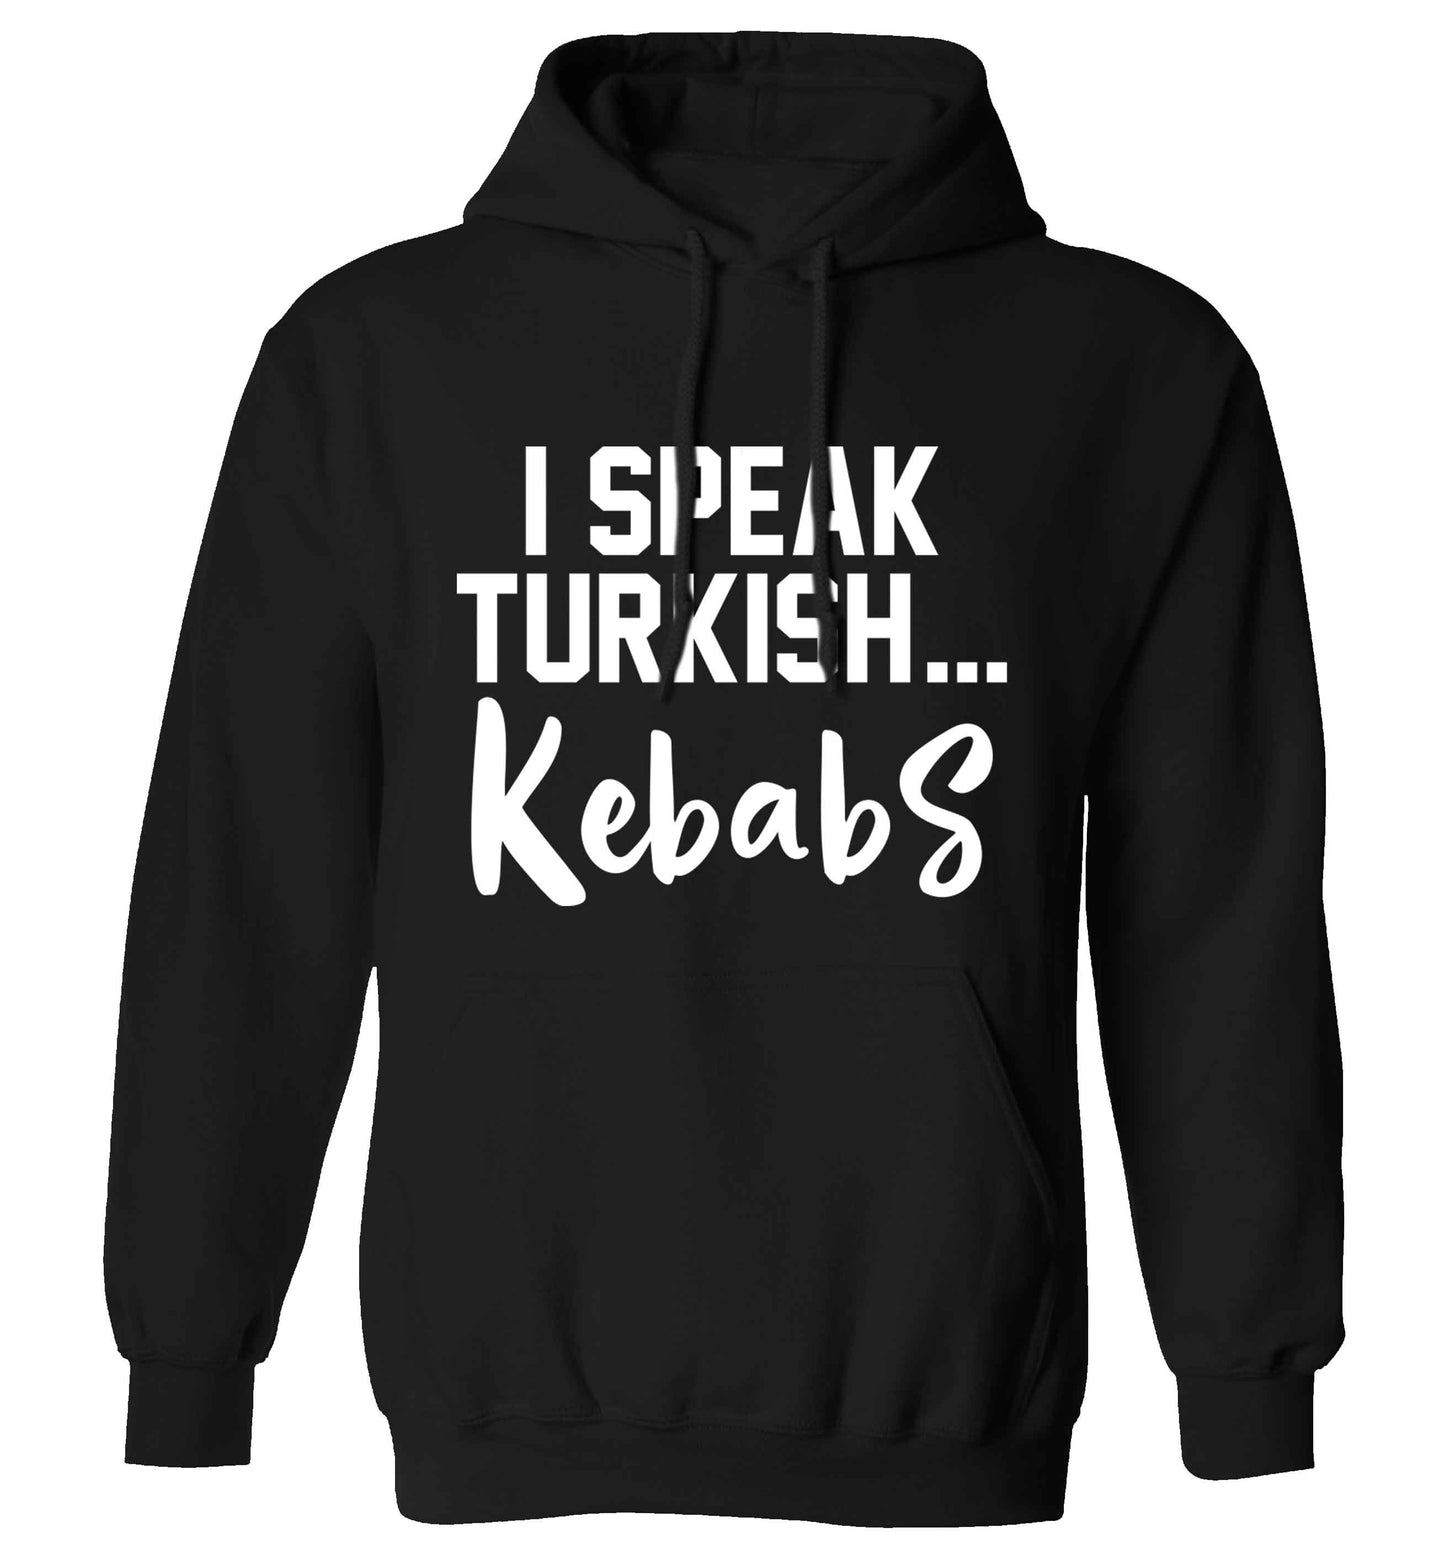 I speak Turkish...kebabs adults unisex black hoodie 2XL